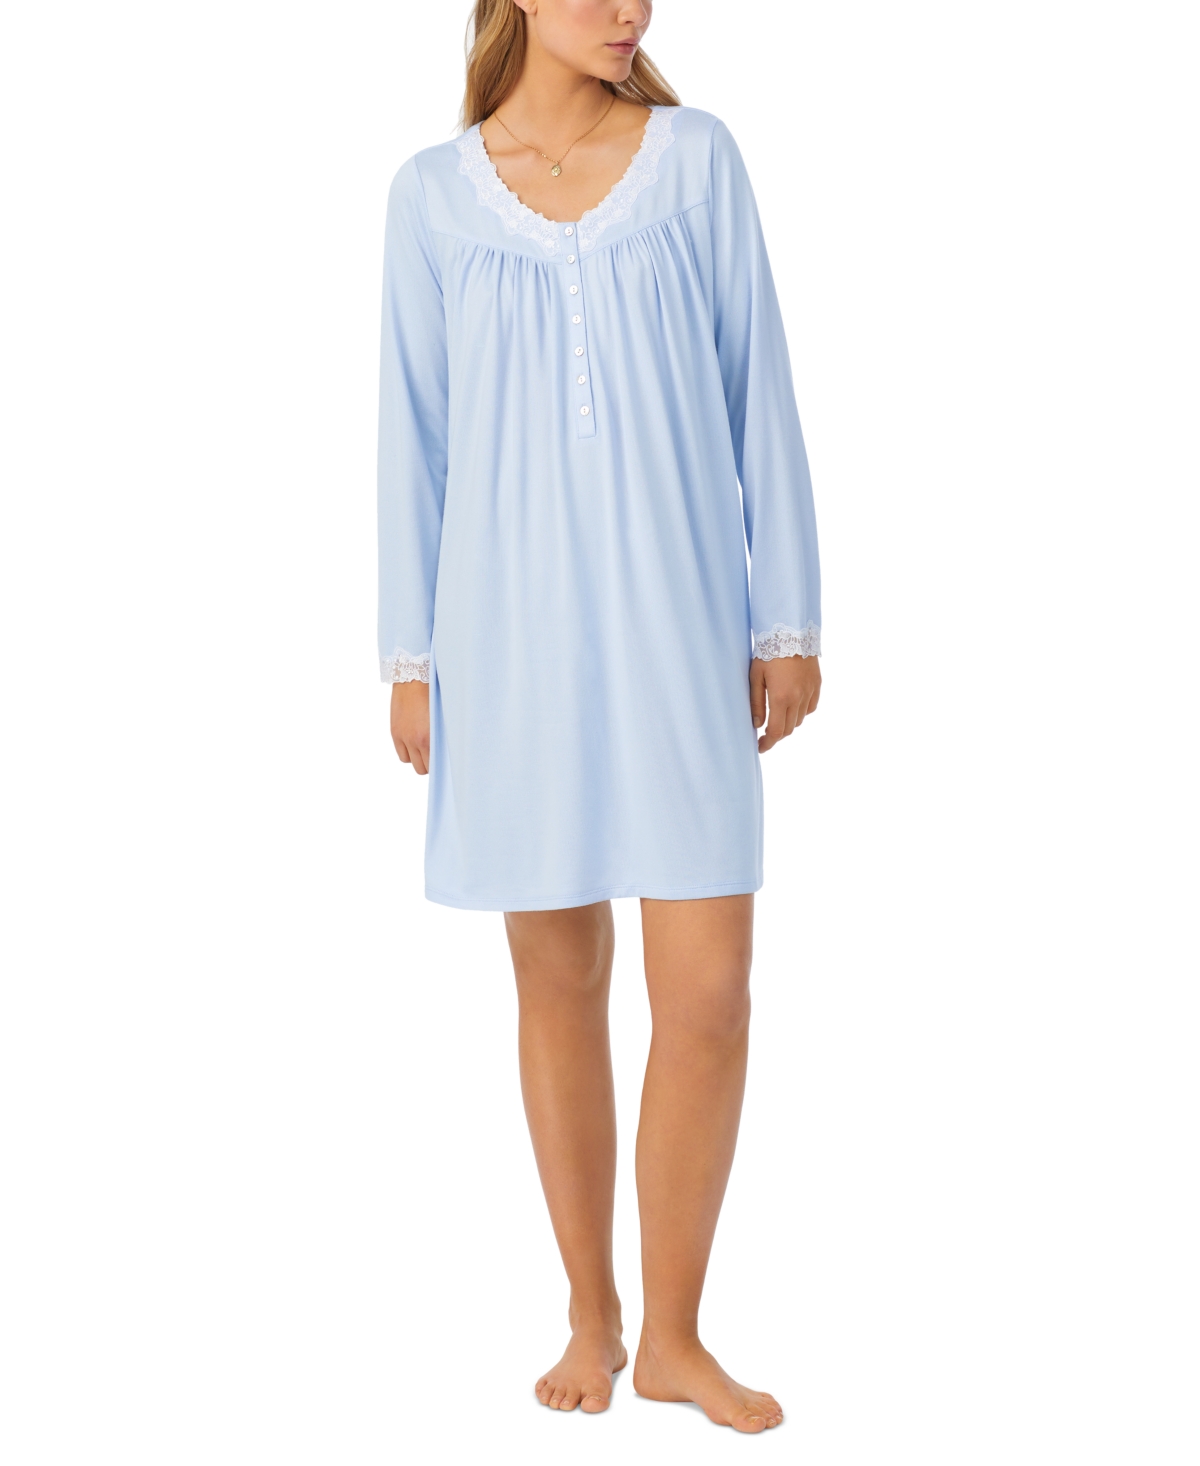 Women's Sweater-Knit Lace-Trim Nightgown - White, Blue Print